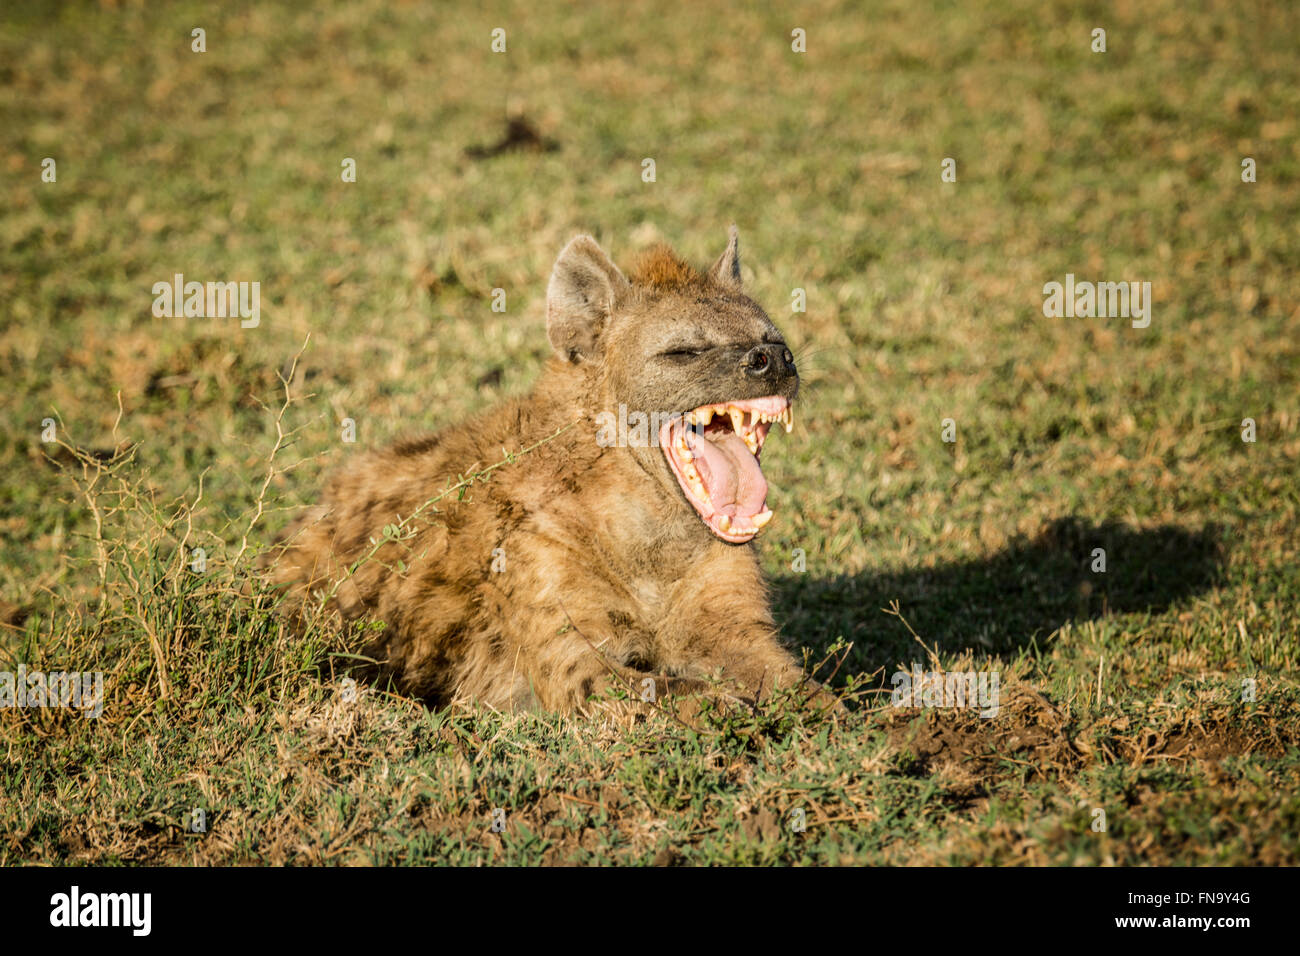 Spotted Hyena, Crocuta crocuta, yawning with mouth wide open, showing his teeth, Masai Mara National Reserve, Kenya, Africa Stock Photo